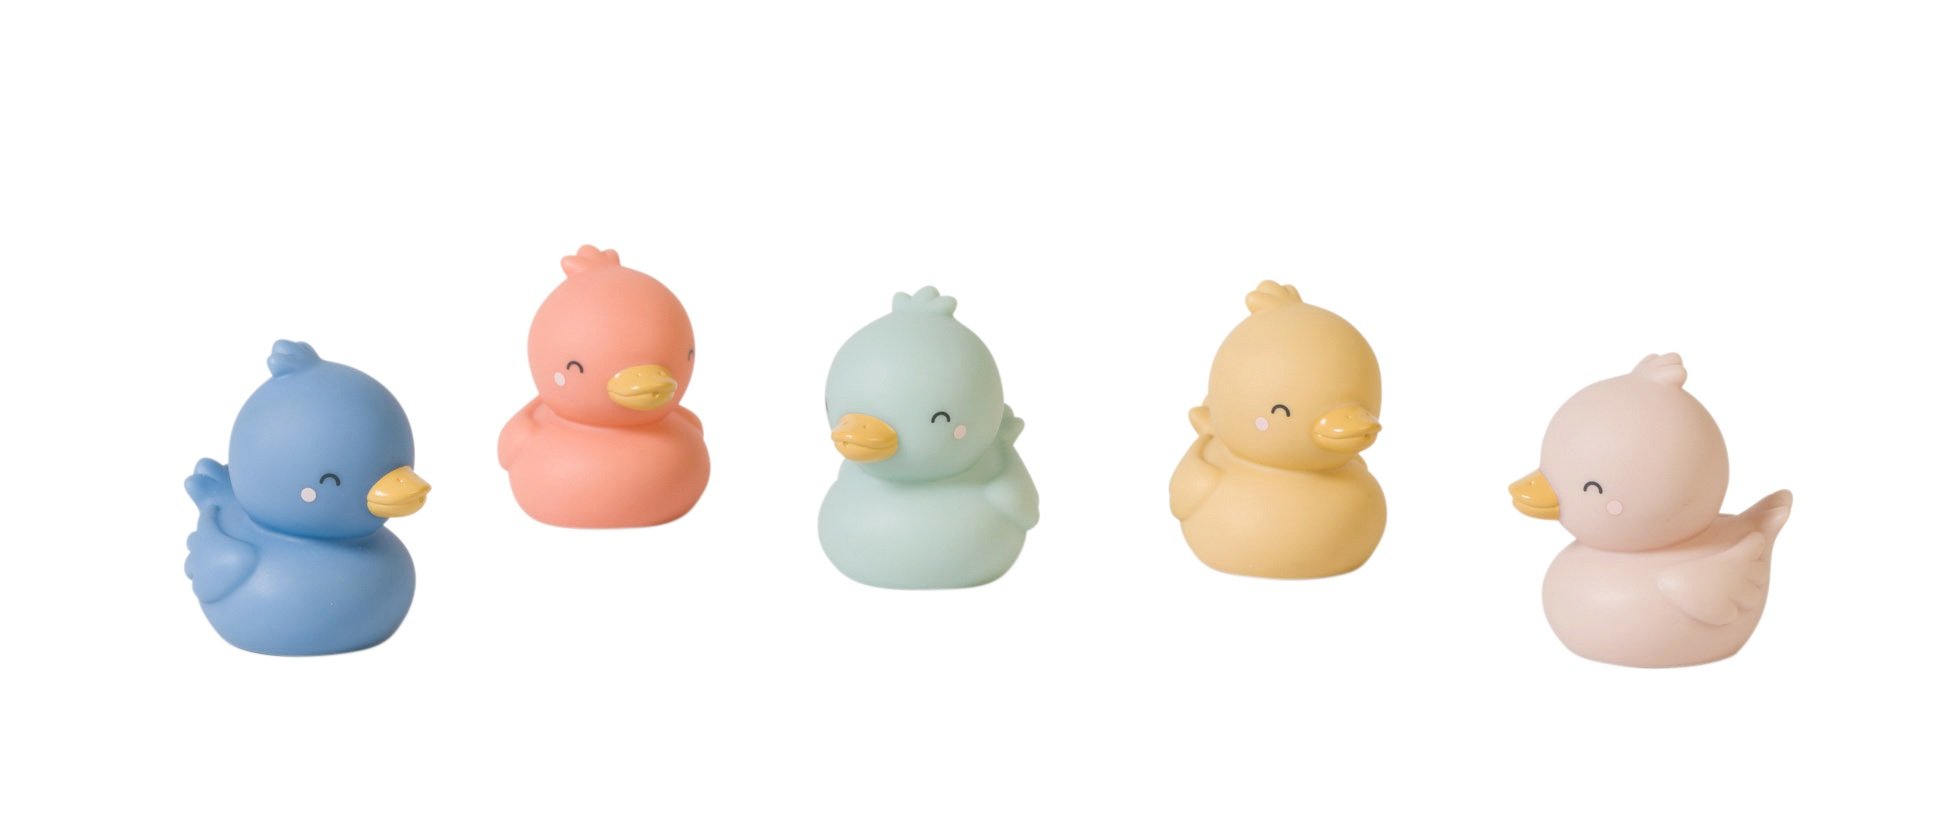 SARO Baby - Little Ducks Bath Toys Multicolored